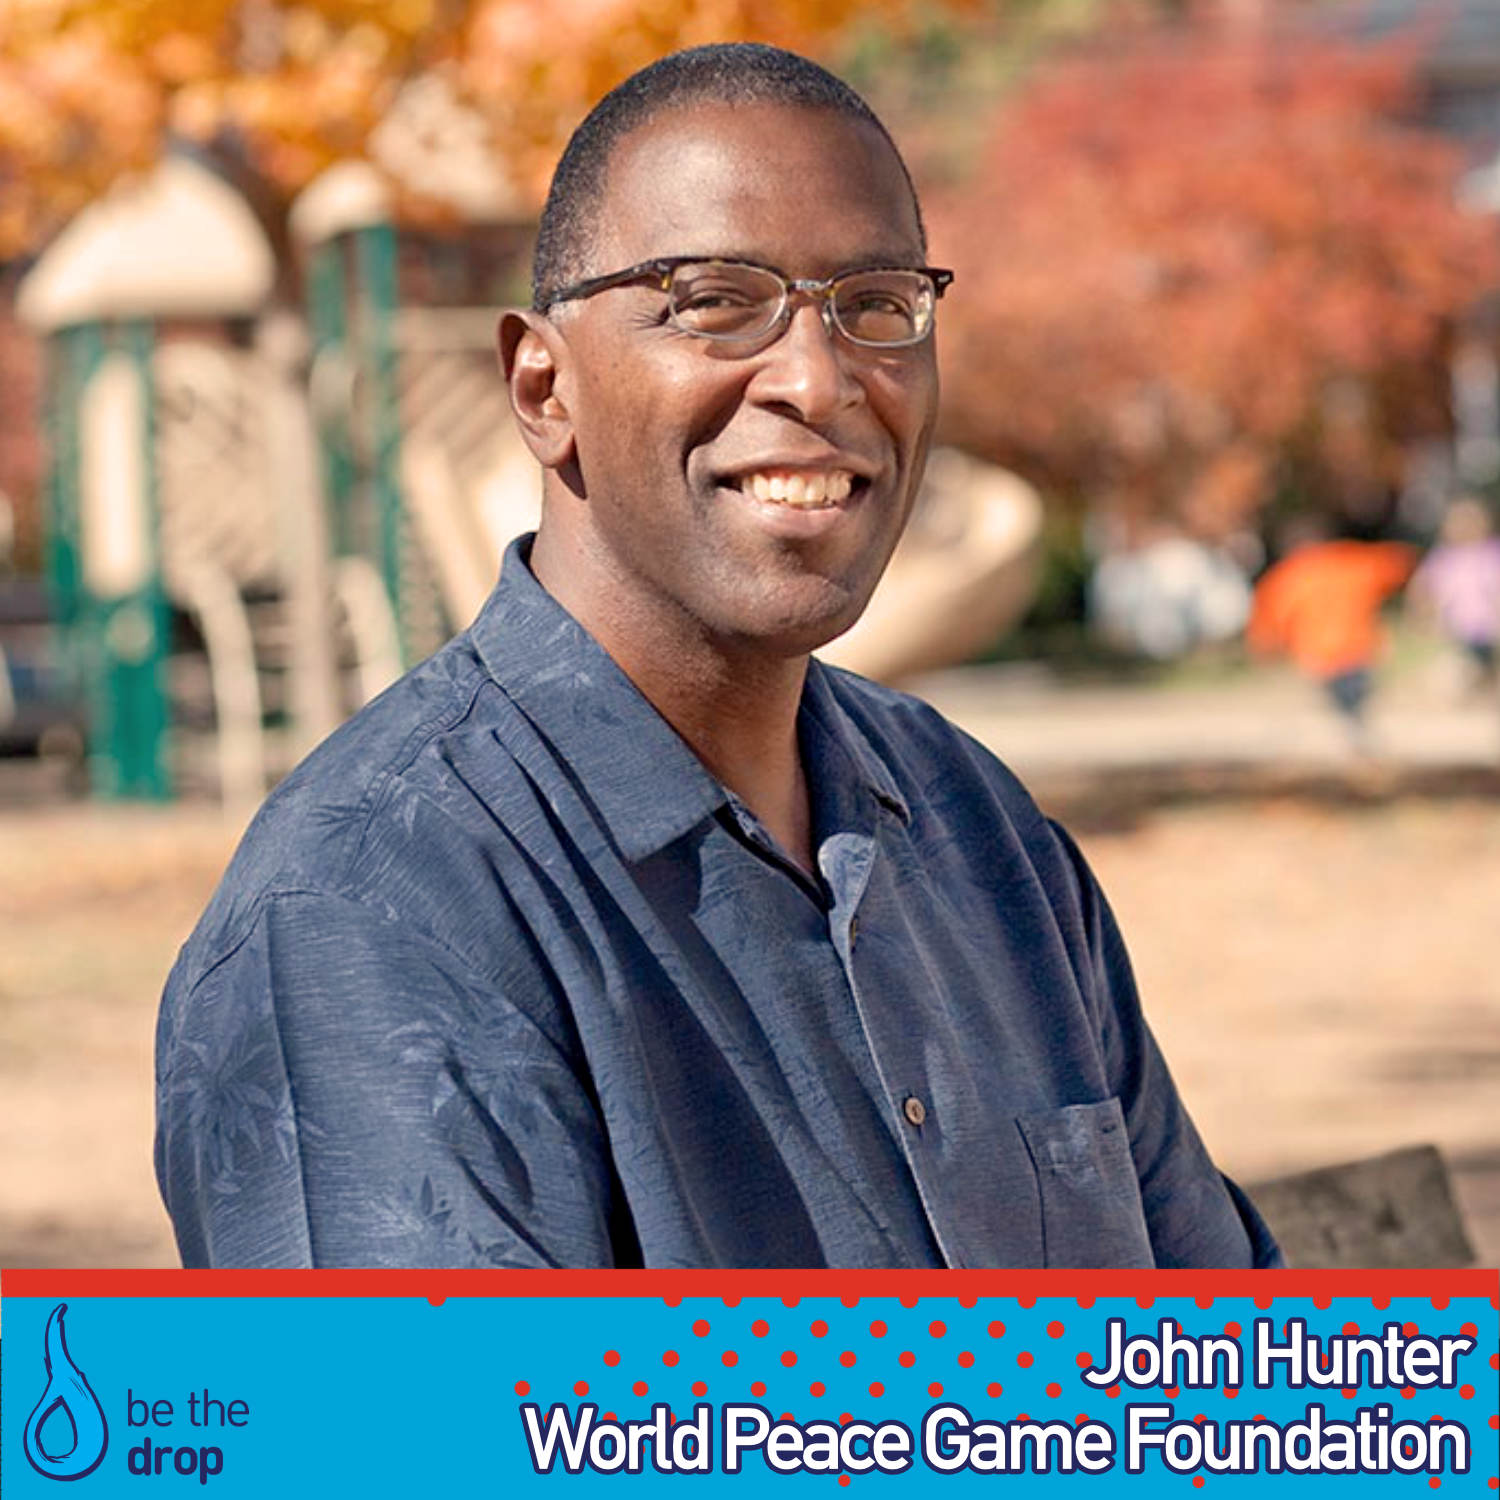 John Hunter Discusses The World Peace Game